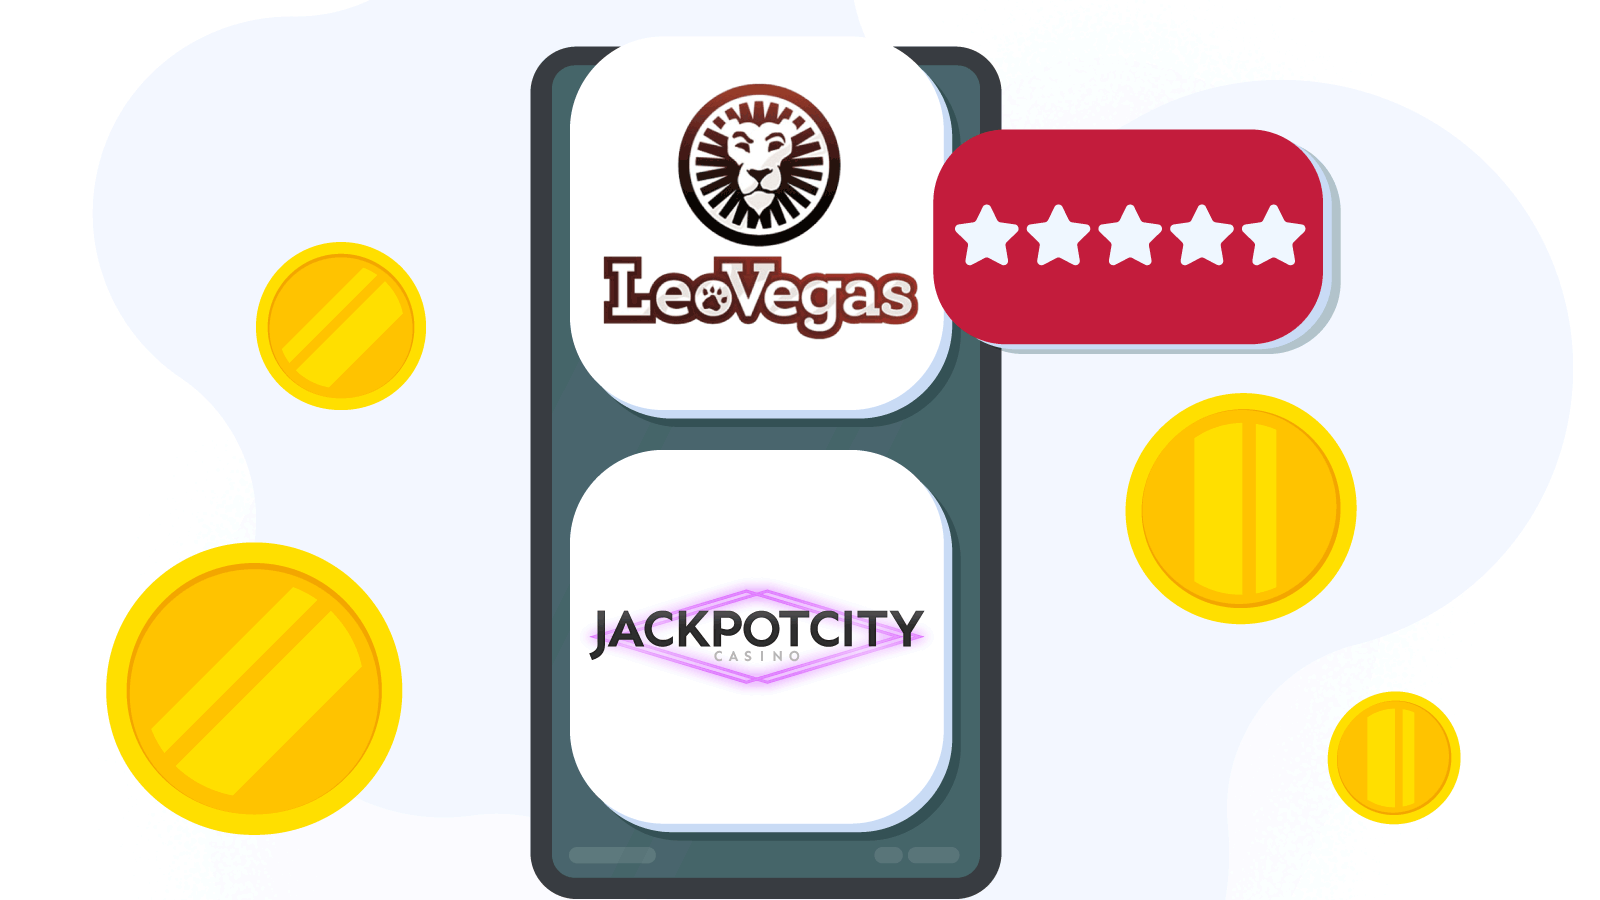 LeoVegas et JackpotCity casino ont des performances équivalentes